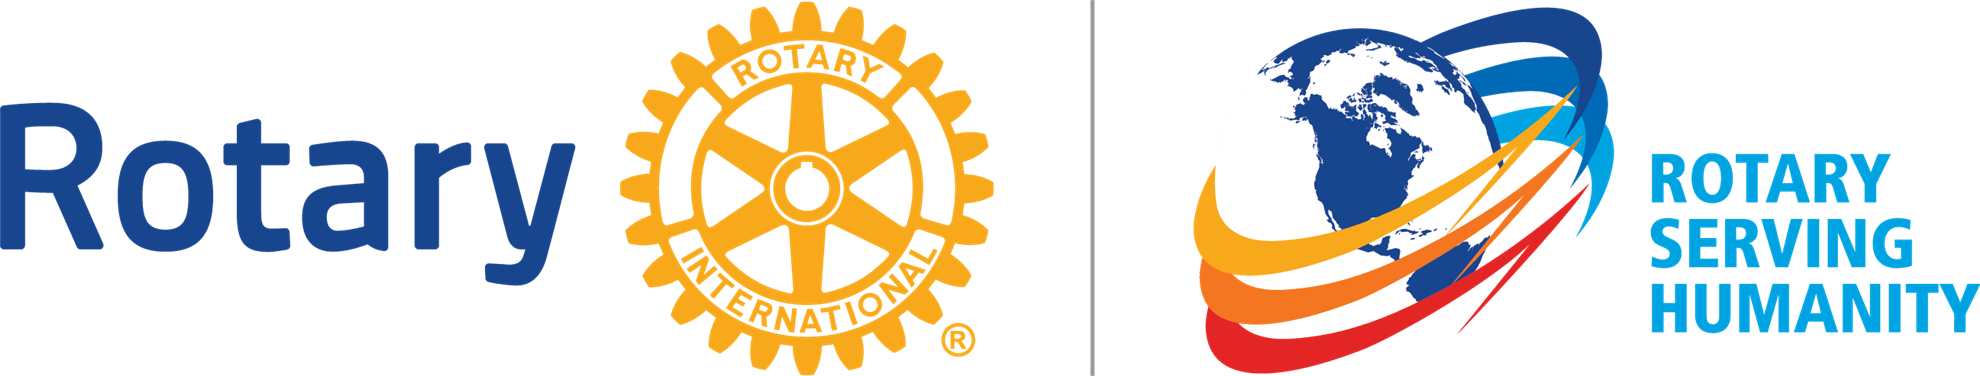 Rotary International Logo 2016 17 (1980x376)